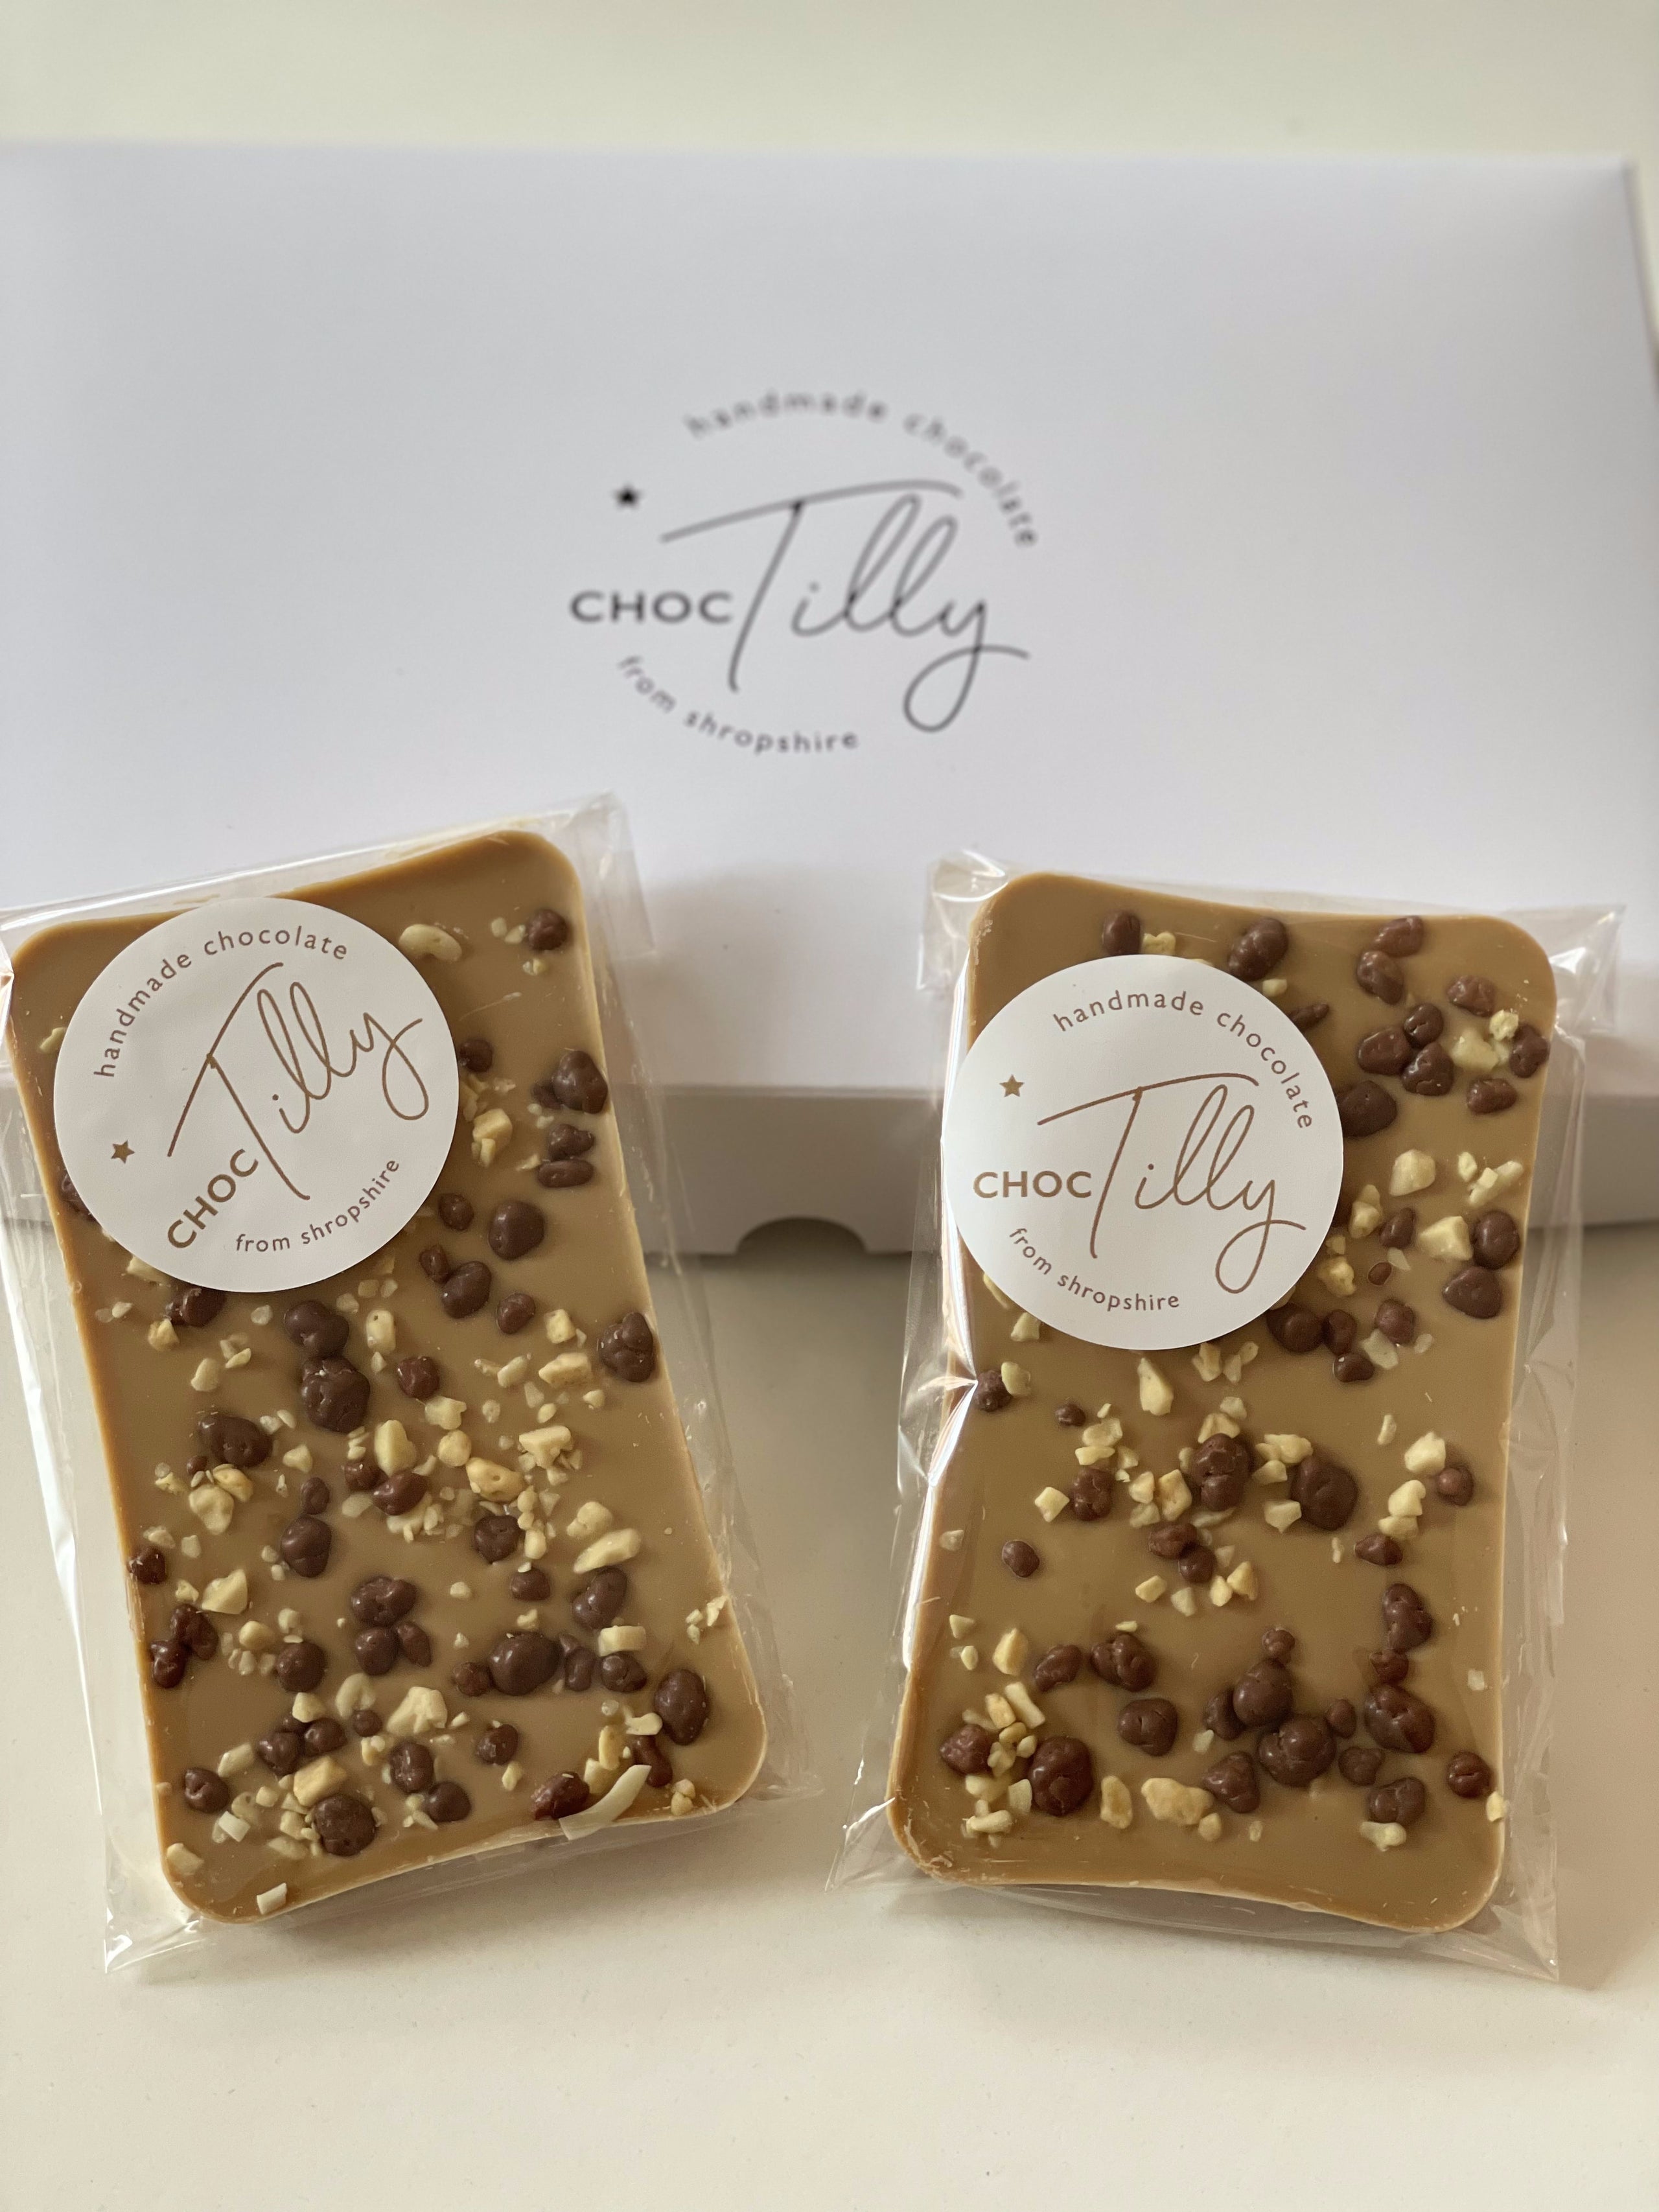 Caramel Crunch Chocolate Bar | Buy Caramel Chocolate Bar UK | ChocTilly